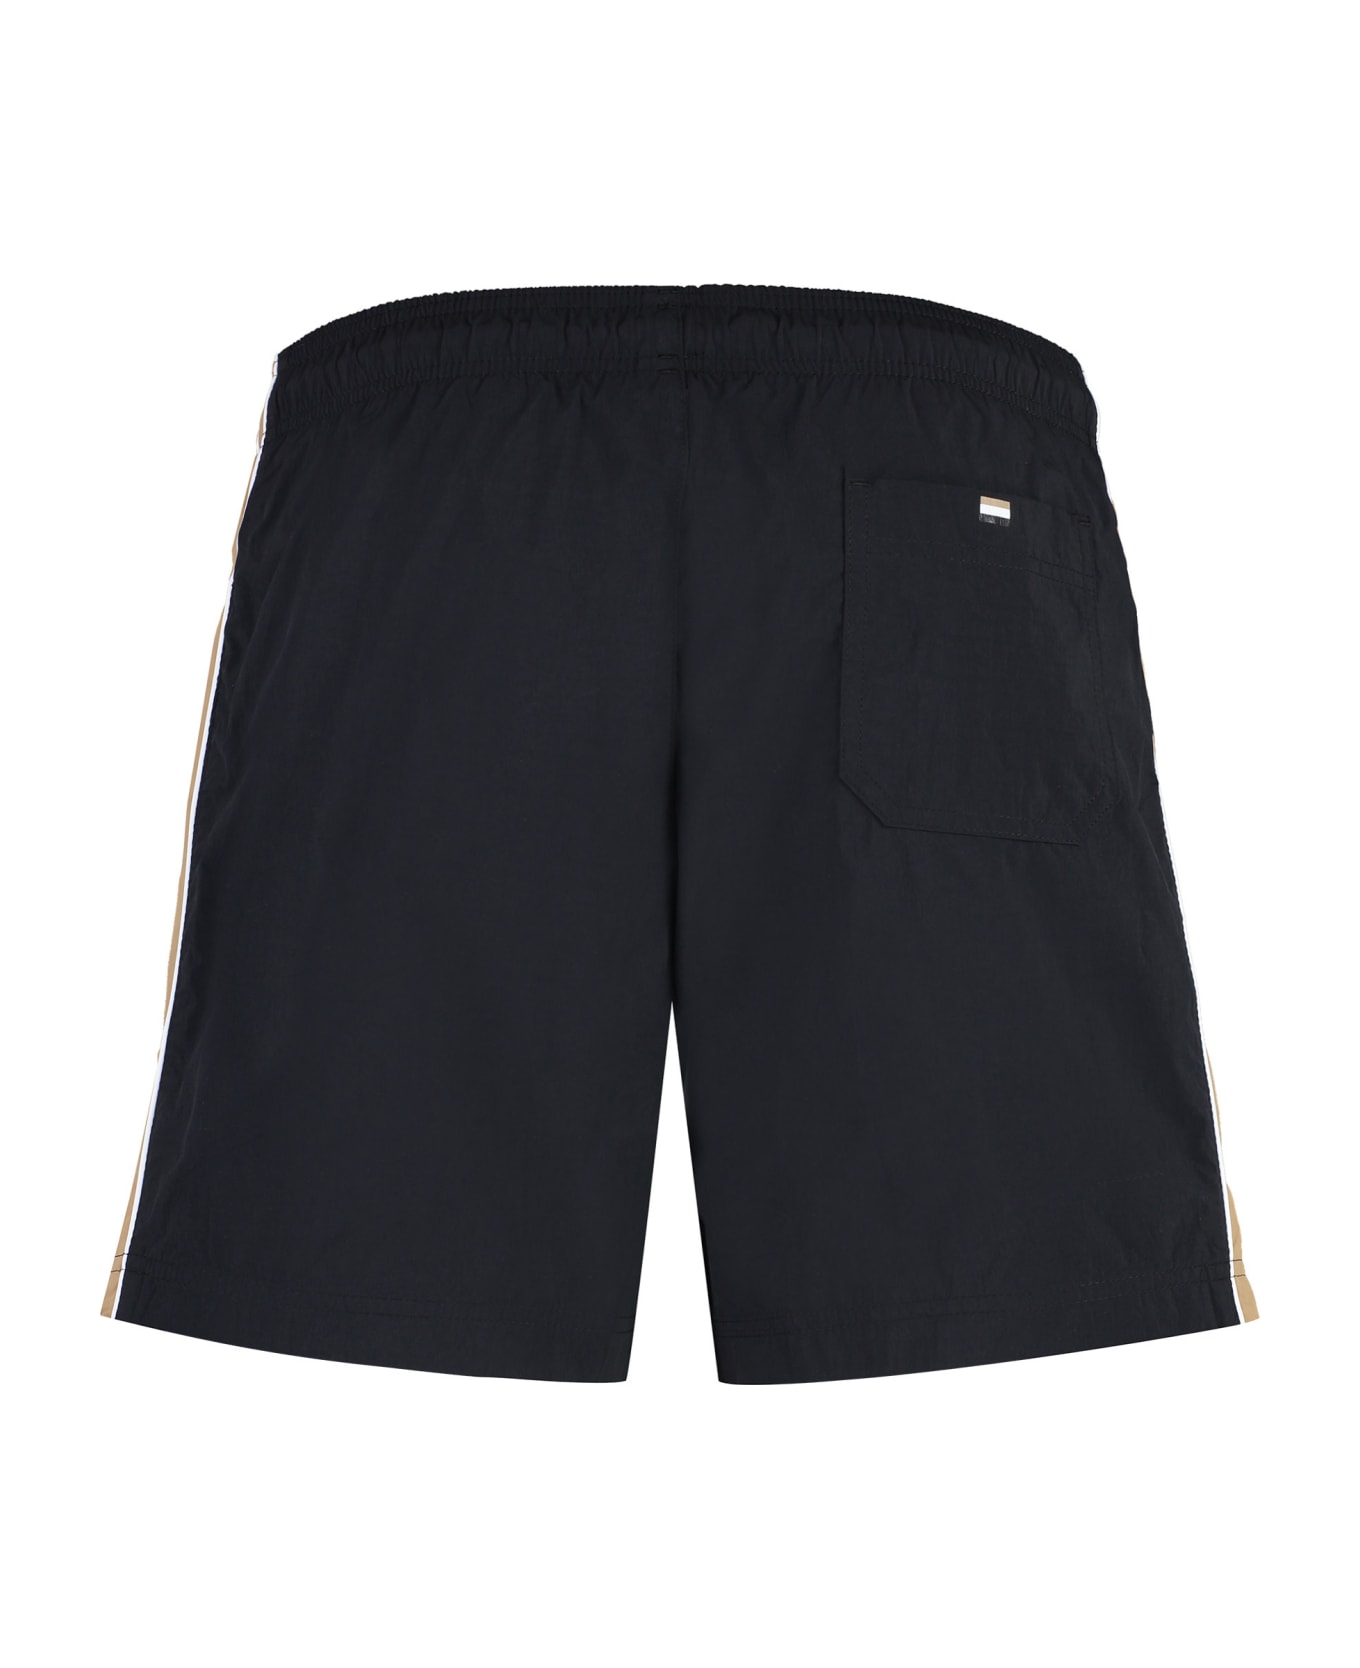 Hugo Boss Nylon Swim Shorts - black